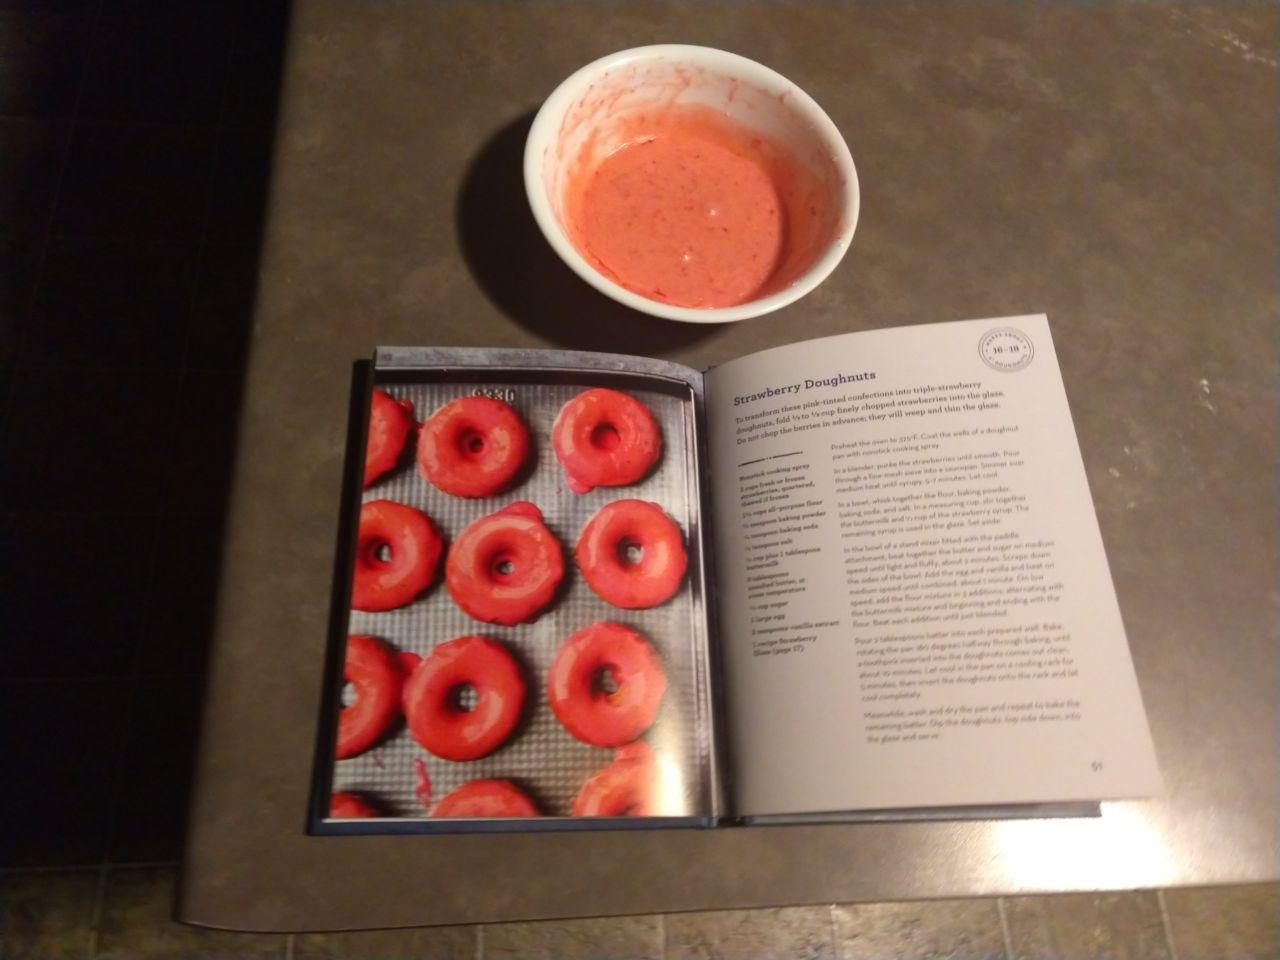 Strawberry donut glaze next to cookbook.